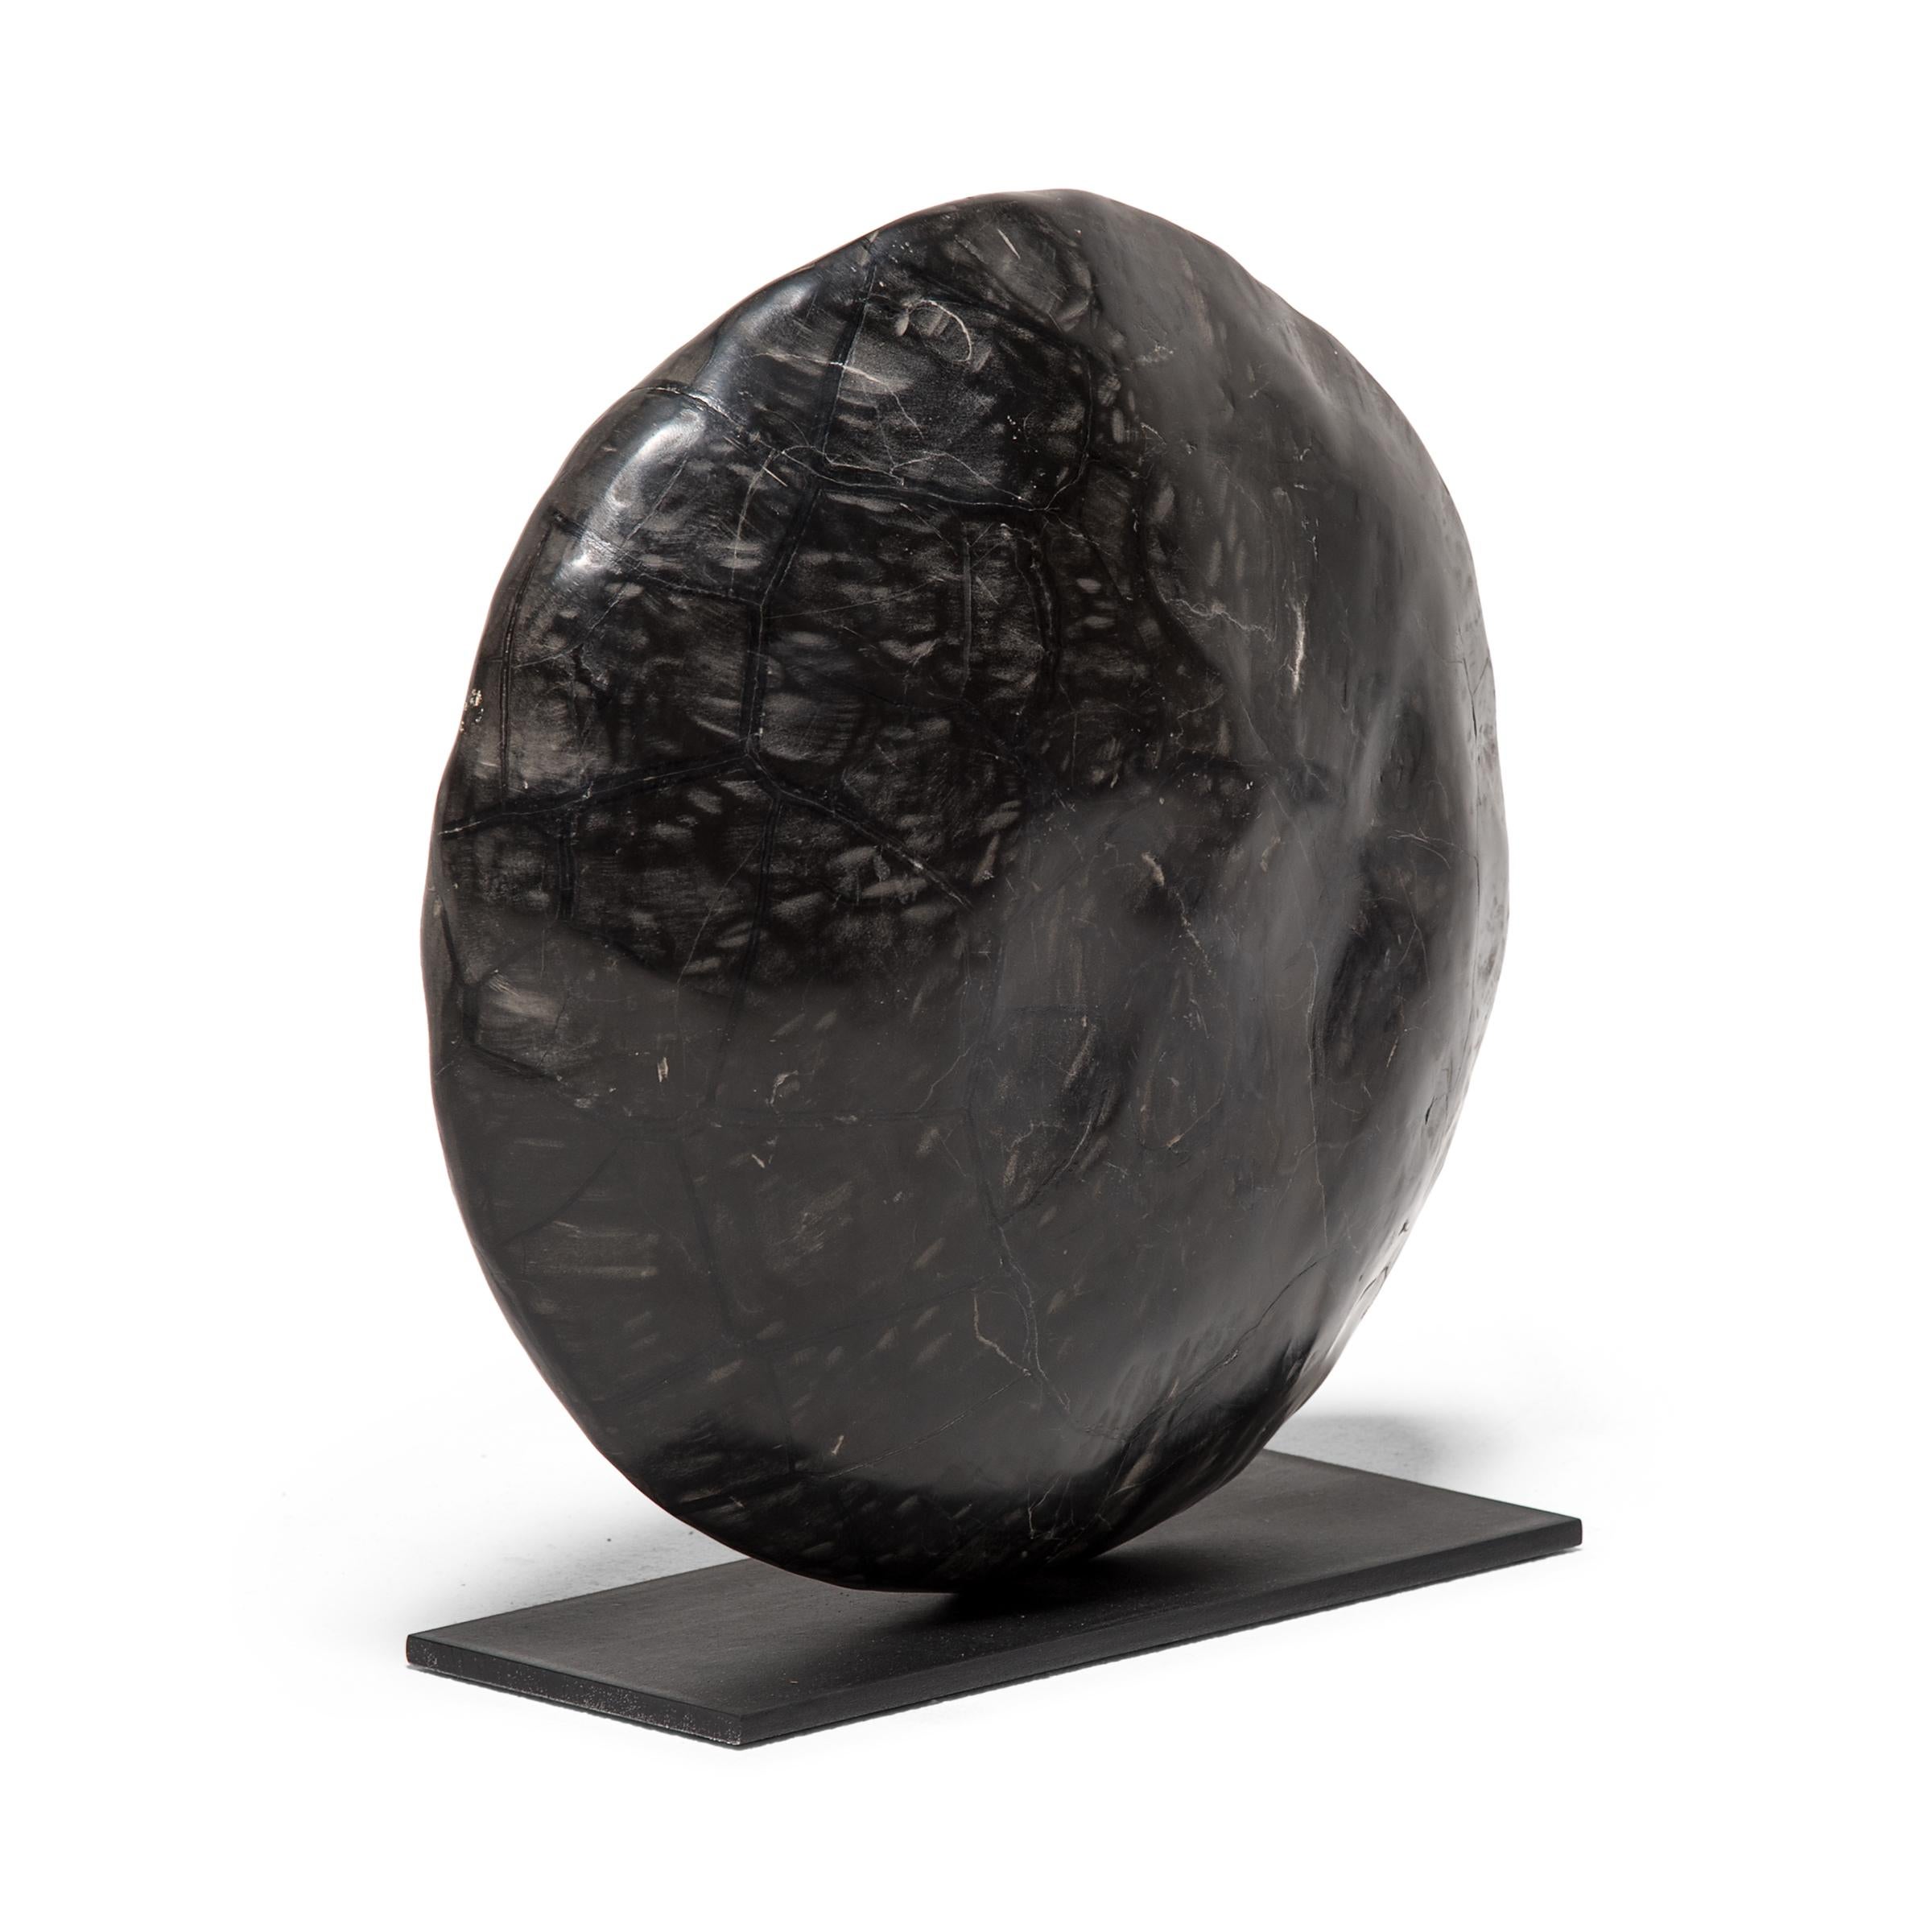 Polished Tortoise Shell Meditation Stone Sculpture